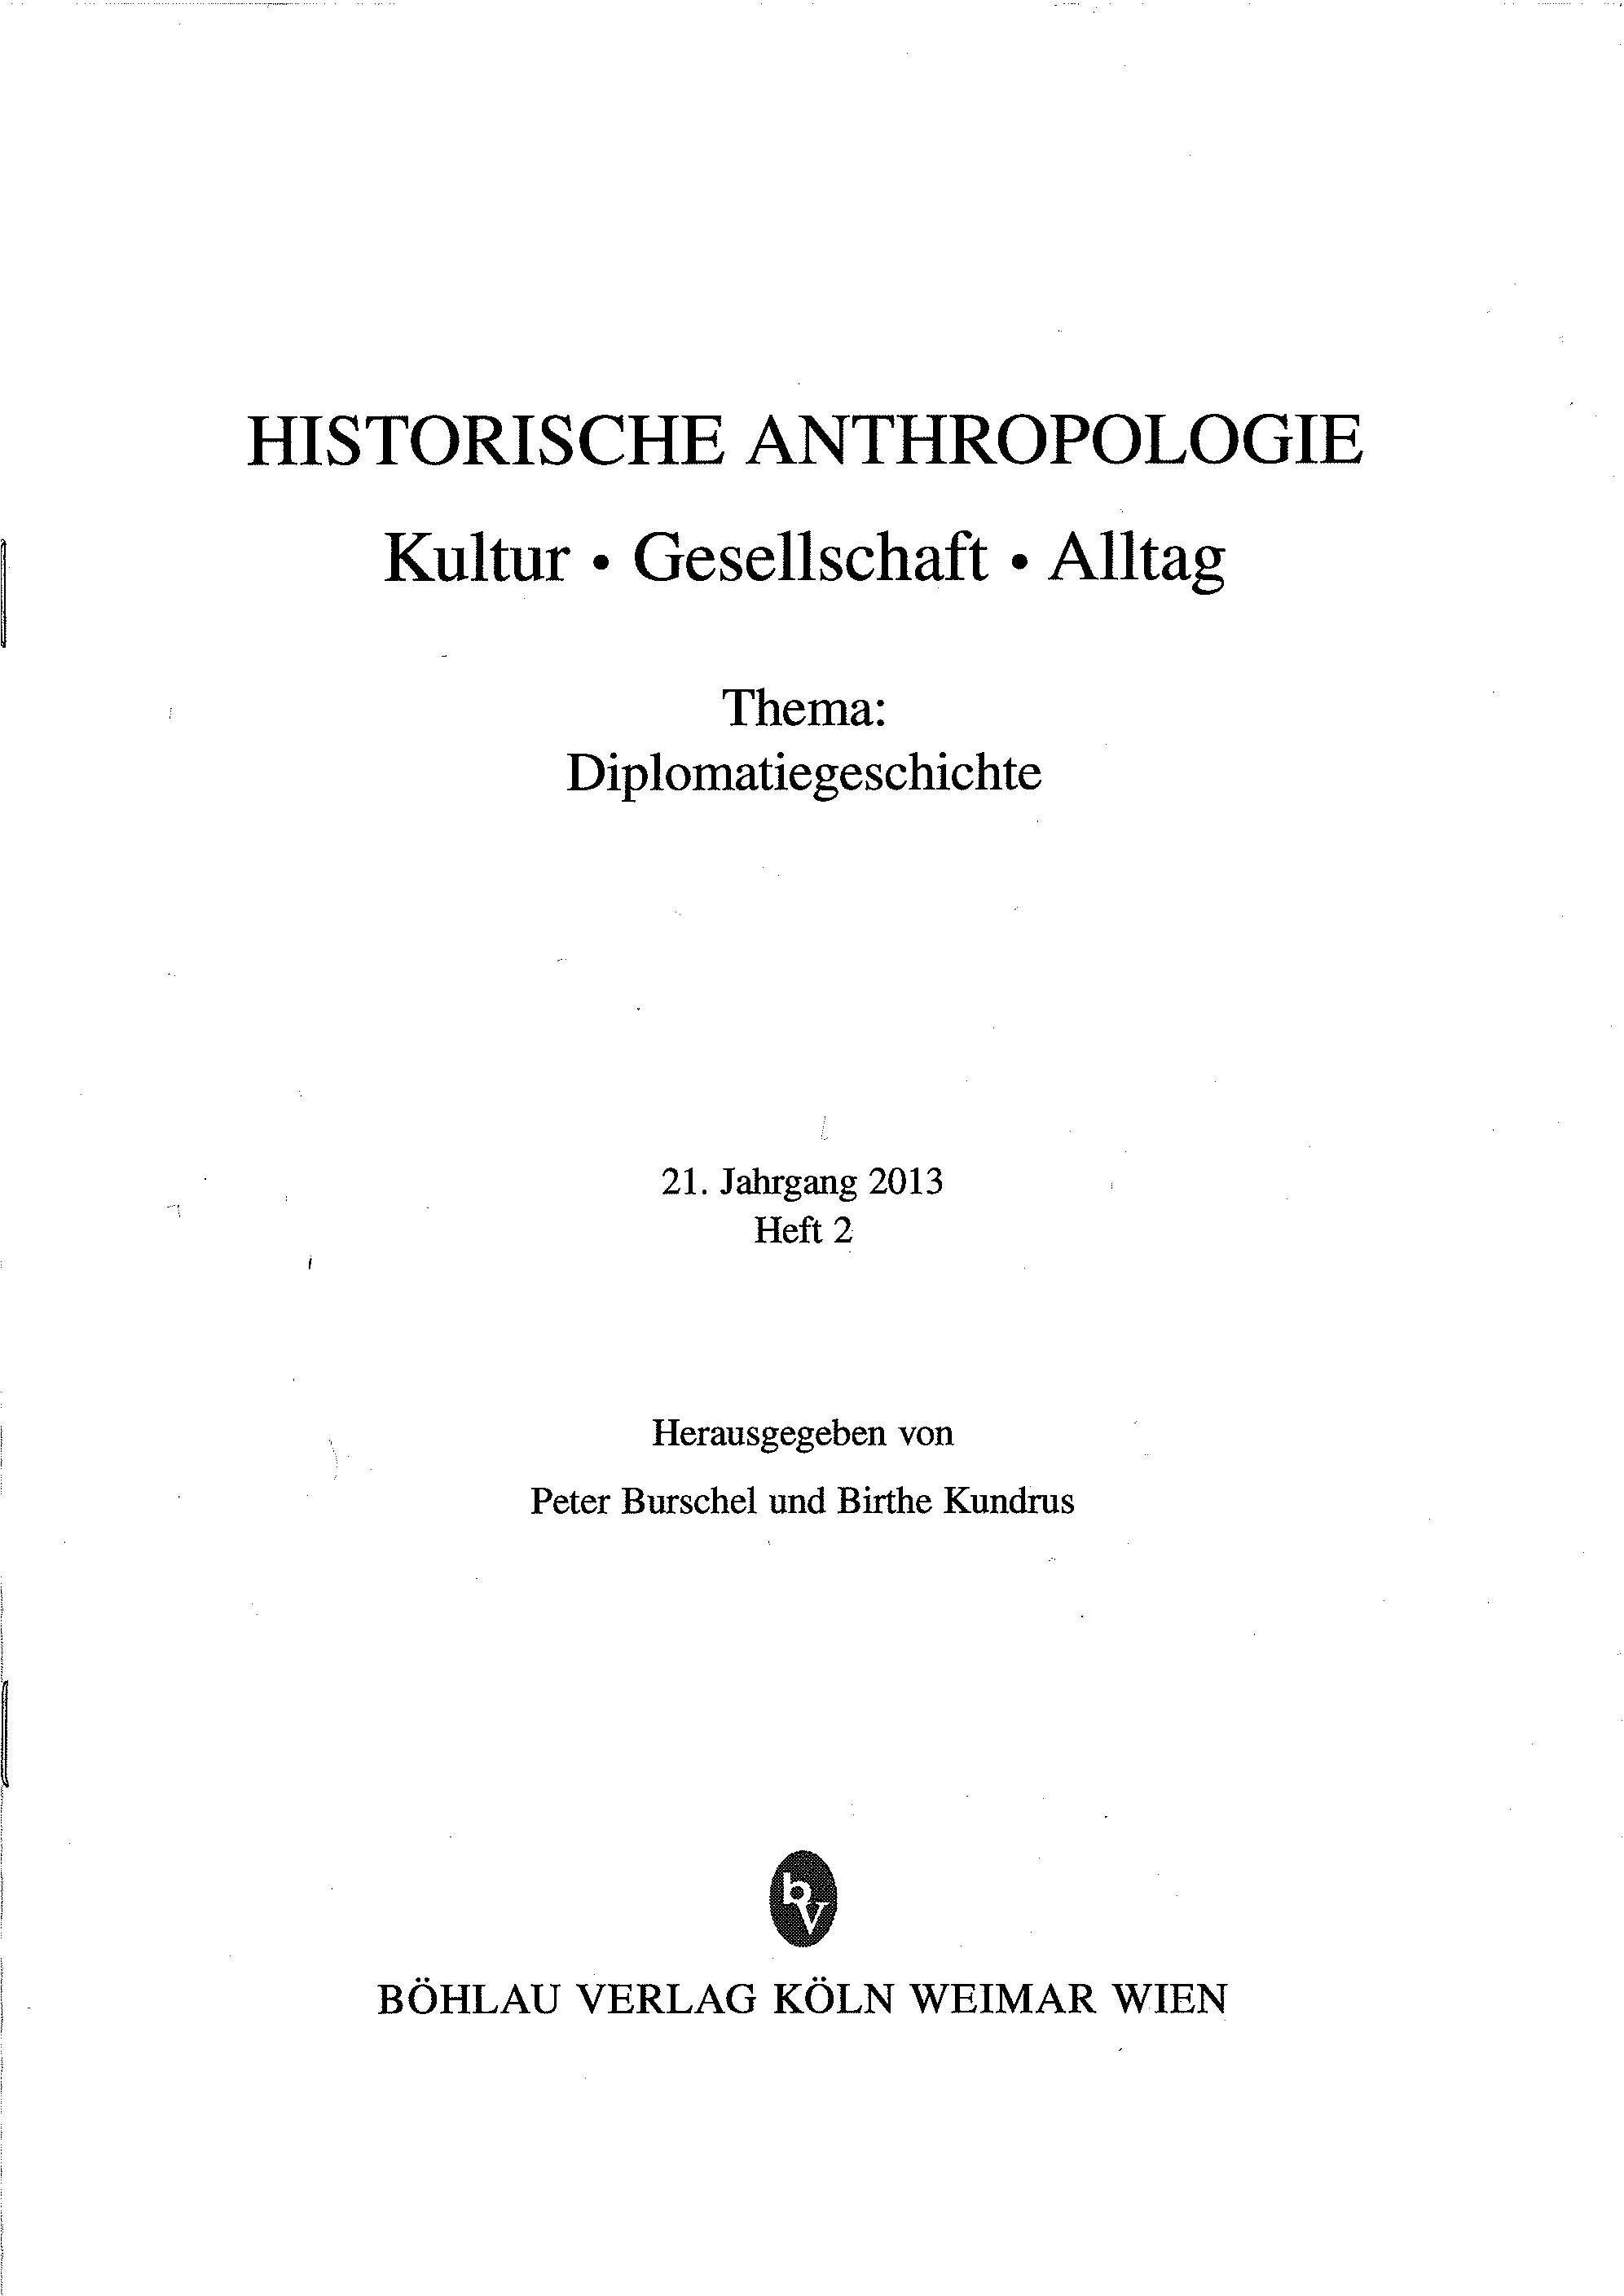 Historische Anthropologie - Diplomatiegeschichte - Deckblatt.jpg